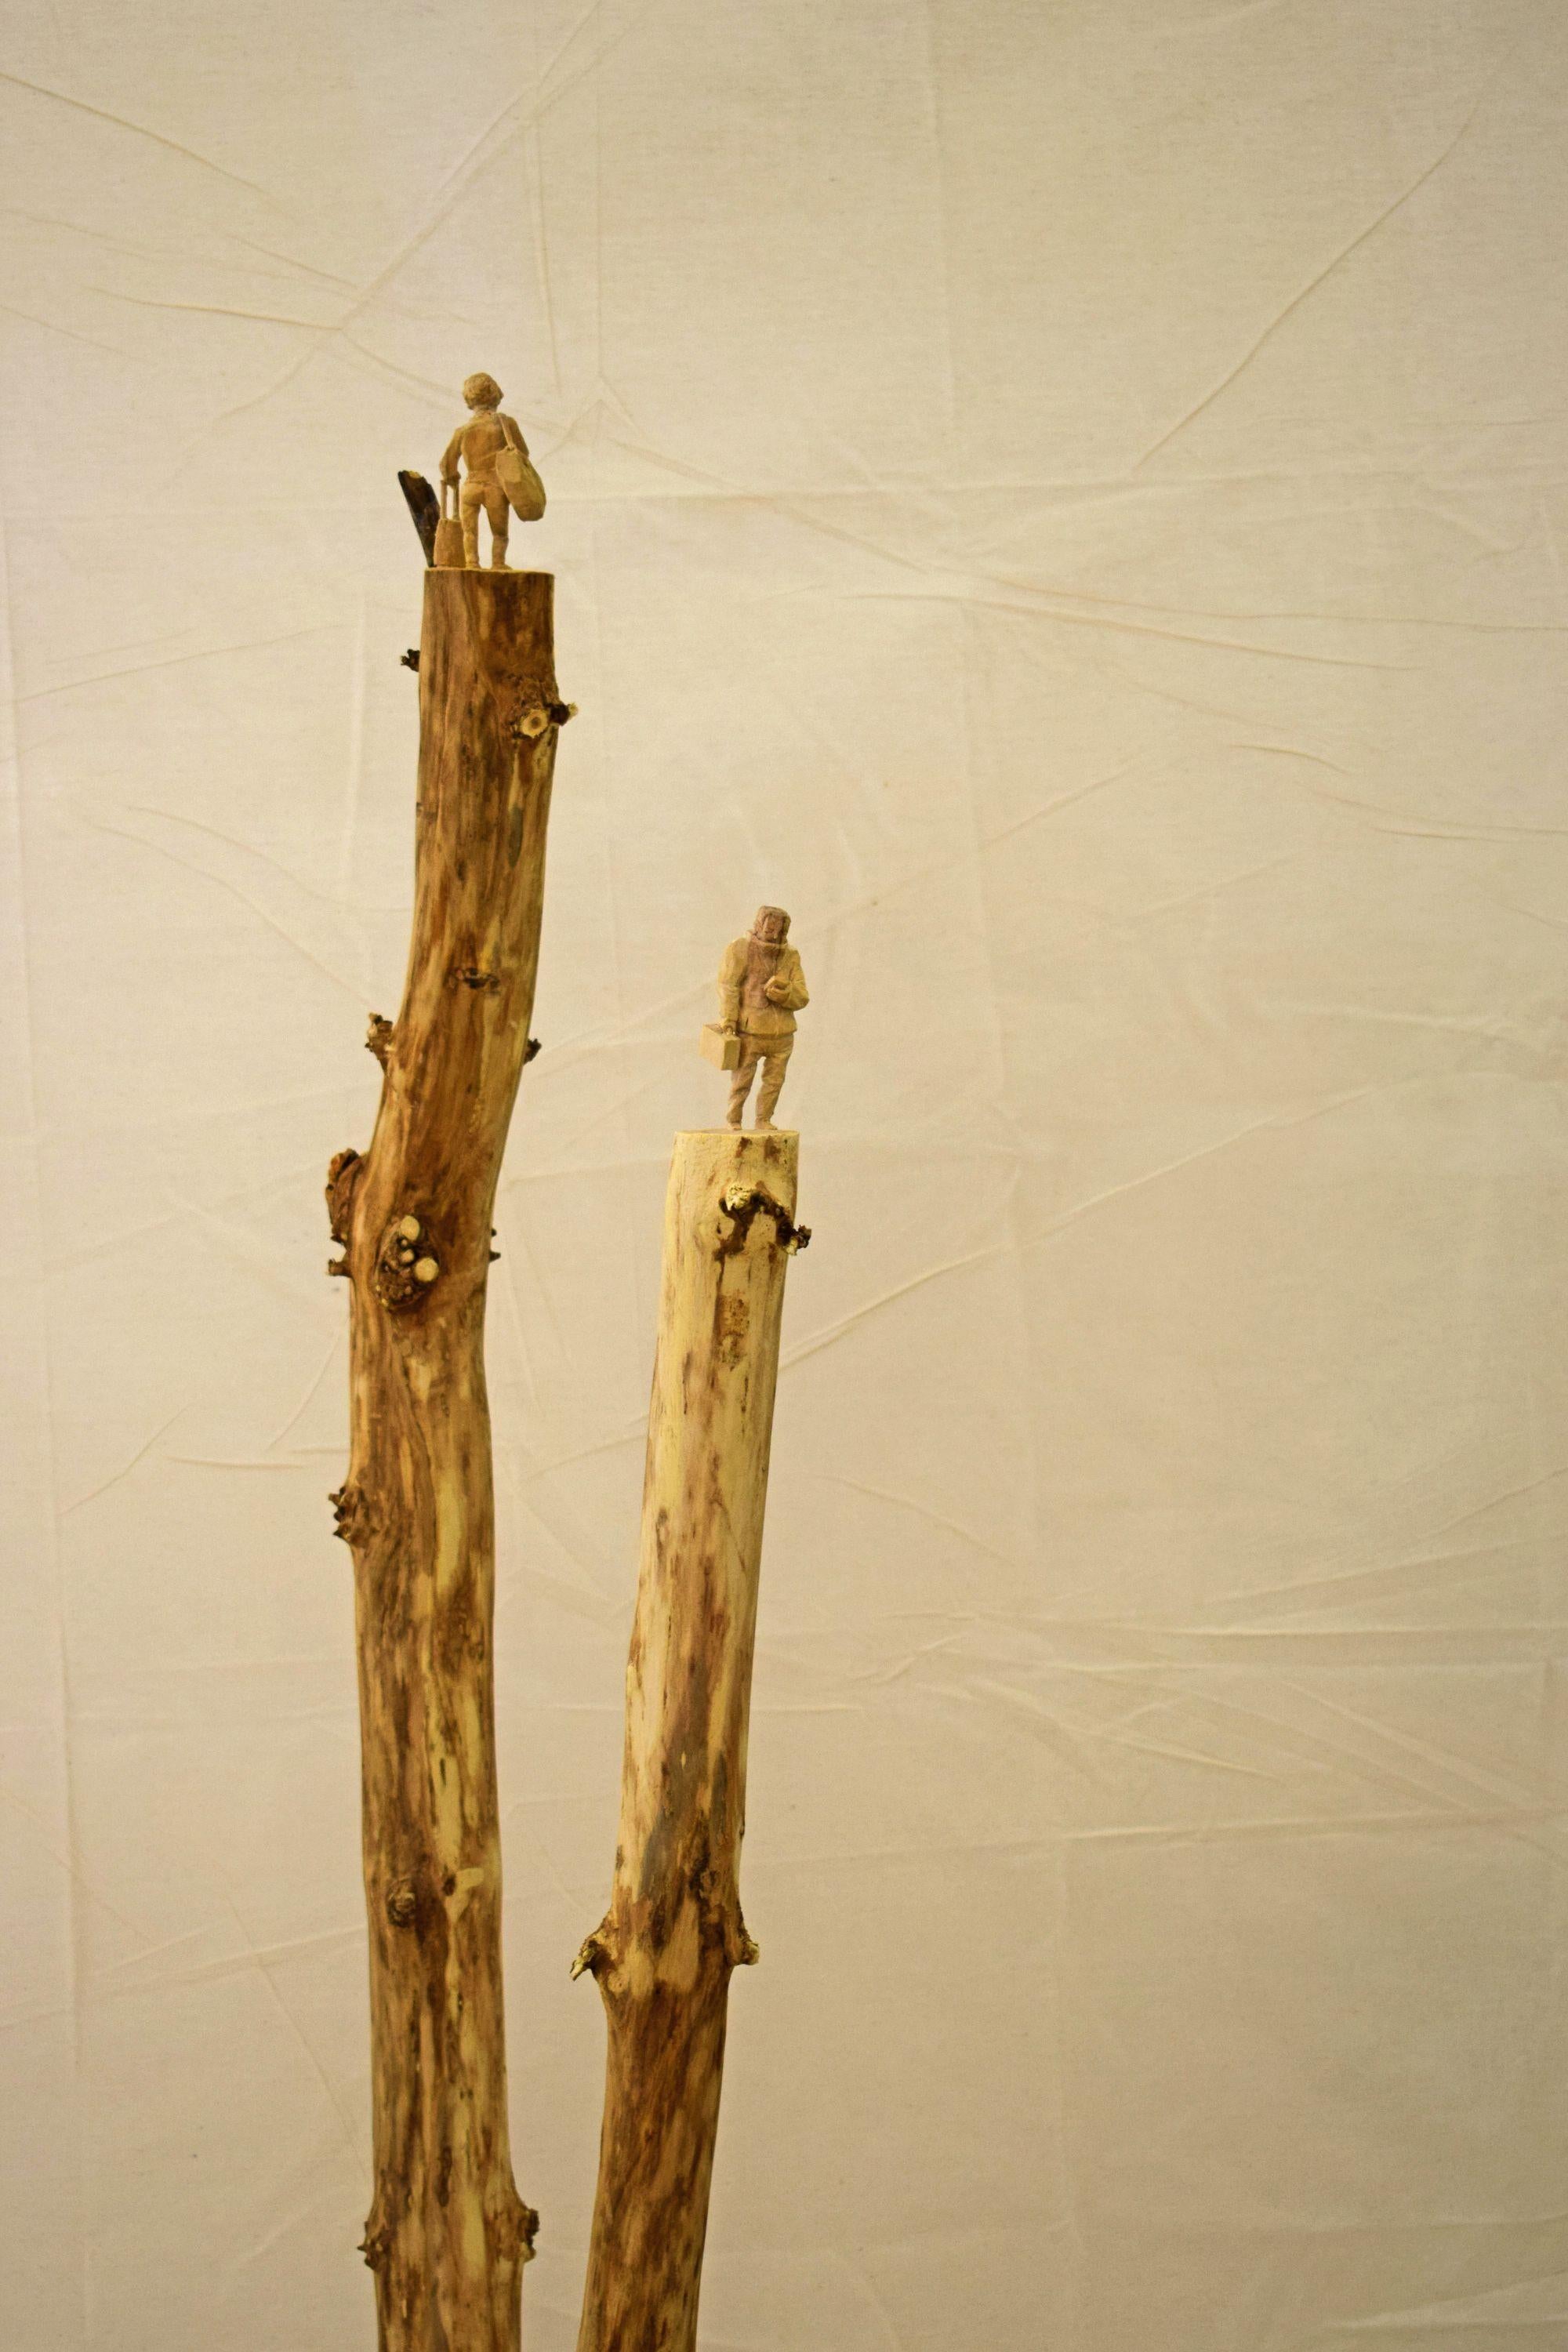 Philipp Liehr Figurative Sculpture - Communication - Wood sculpture, figurative sculpture, wood carving